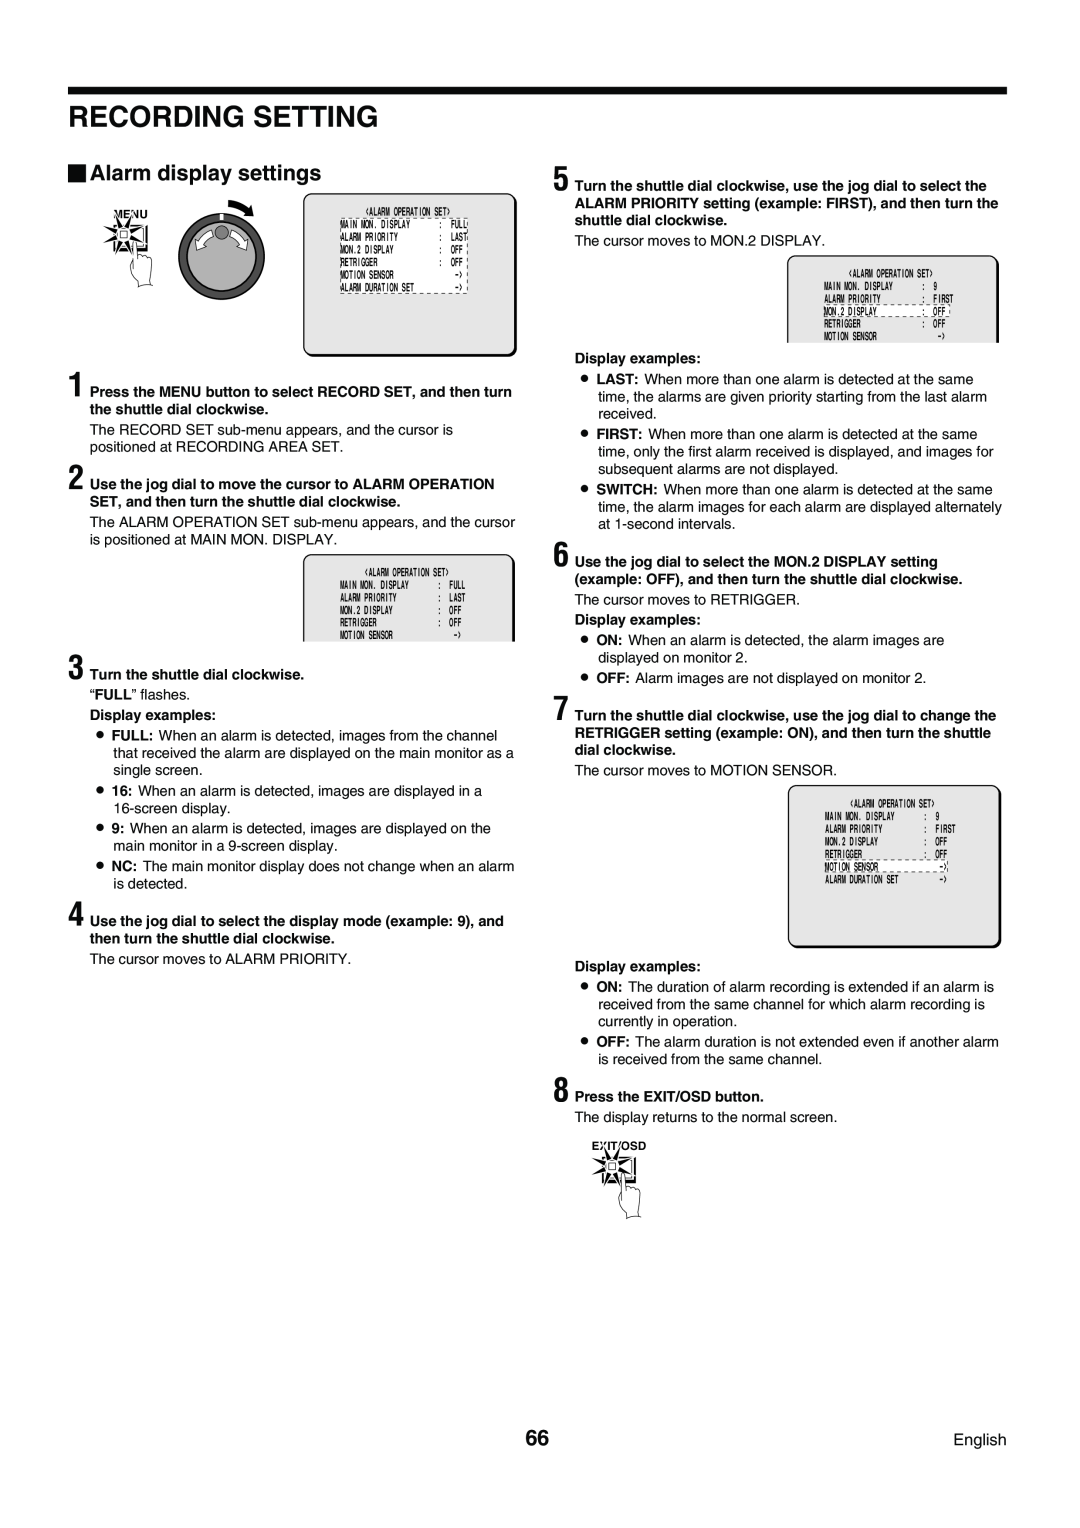 Sanyo DSR-3009P instruction manual Alarm display settings, Recording Setting 